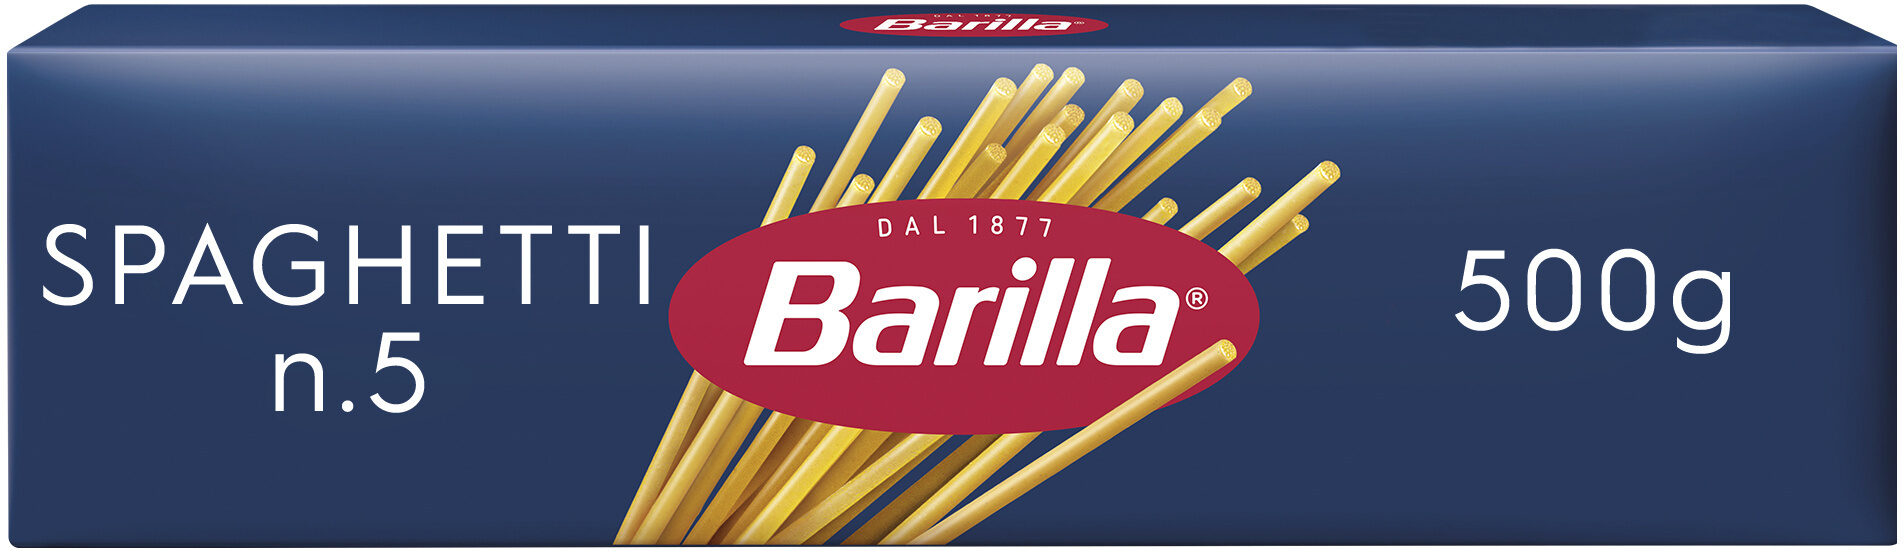 Barilla pates spaghetti n°5 500g - Produkt - fr